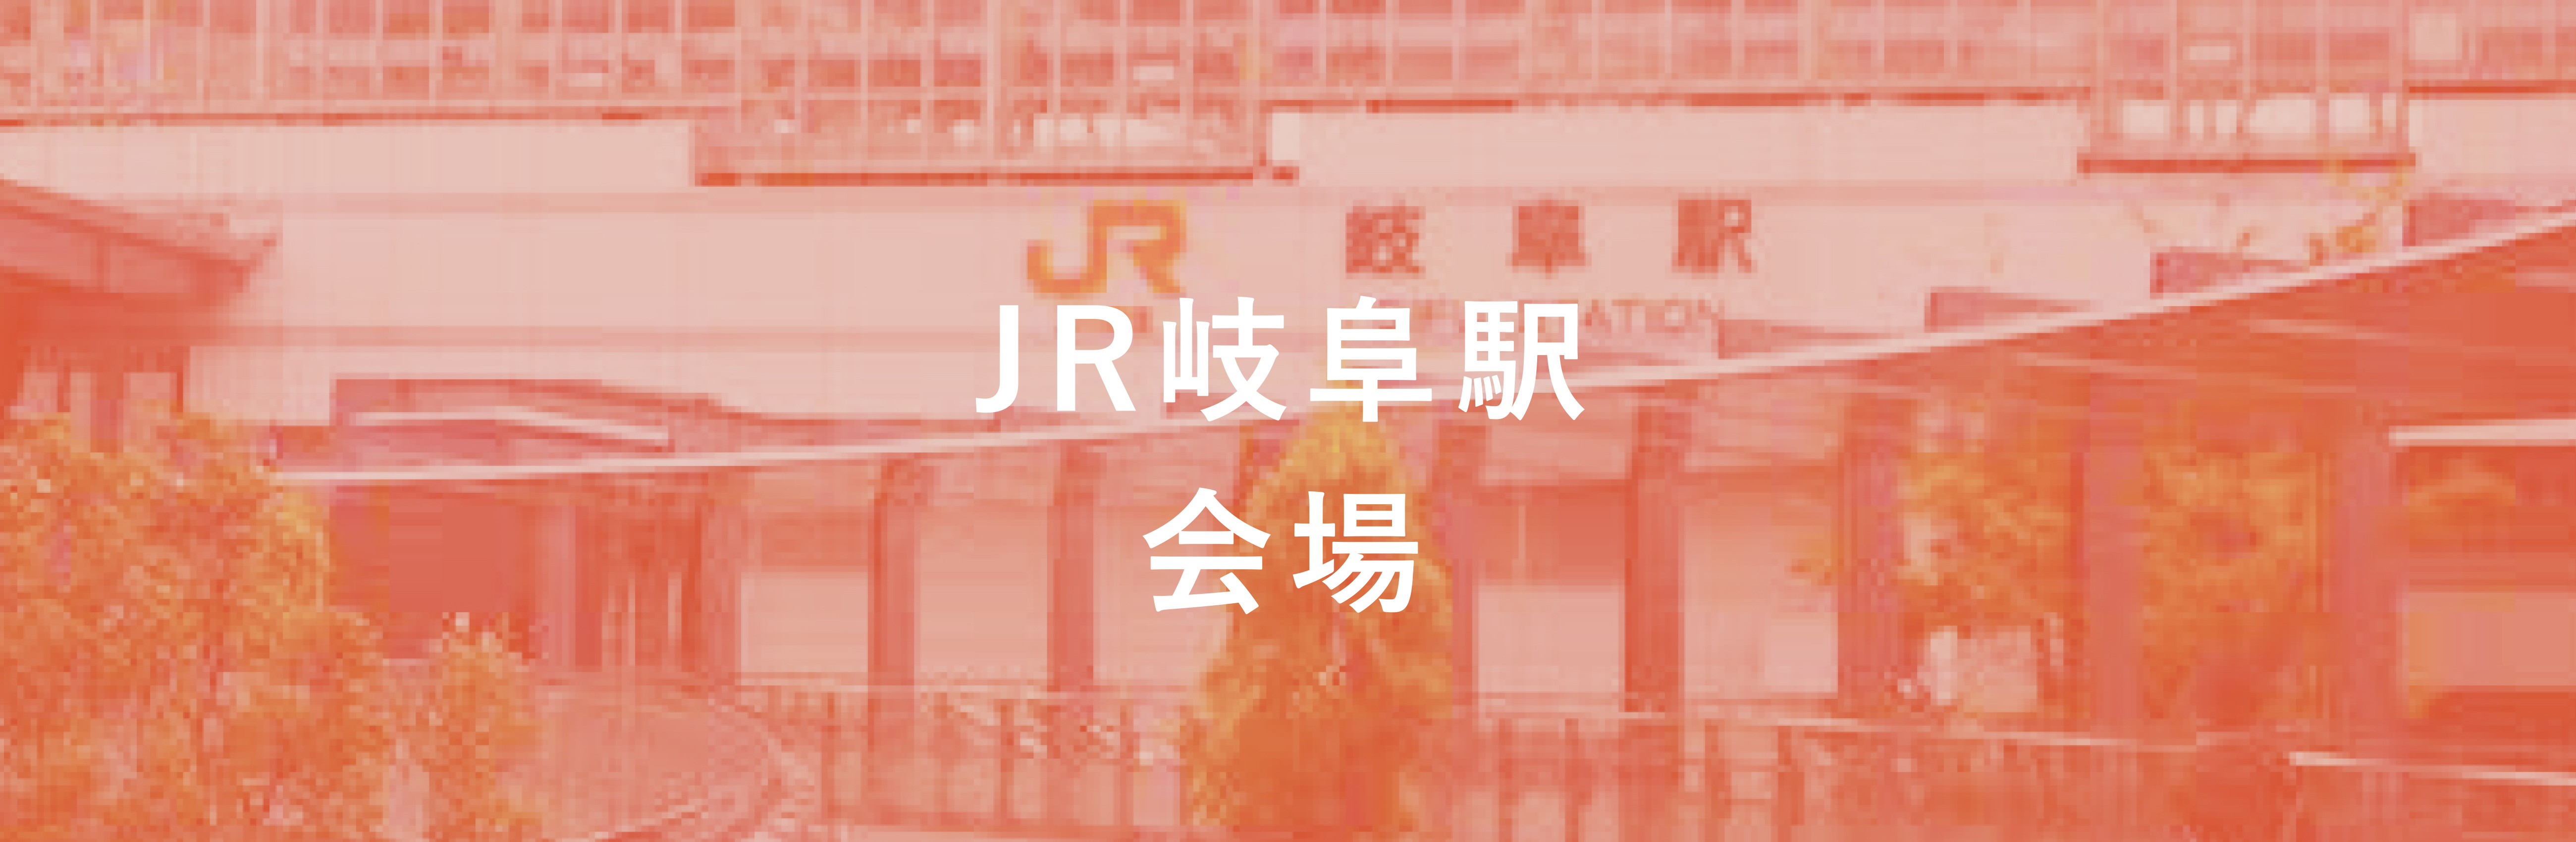 JR岐阜駅会場